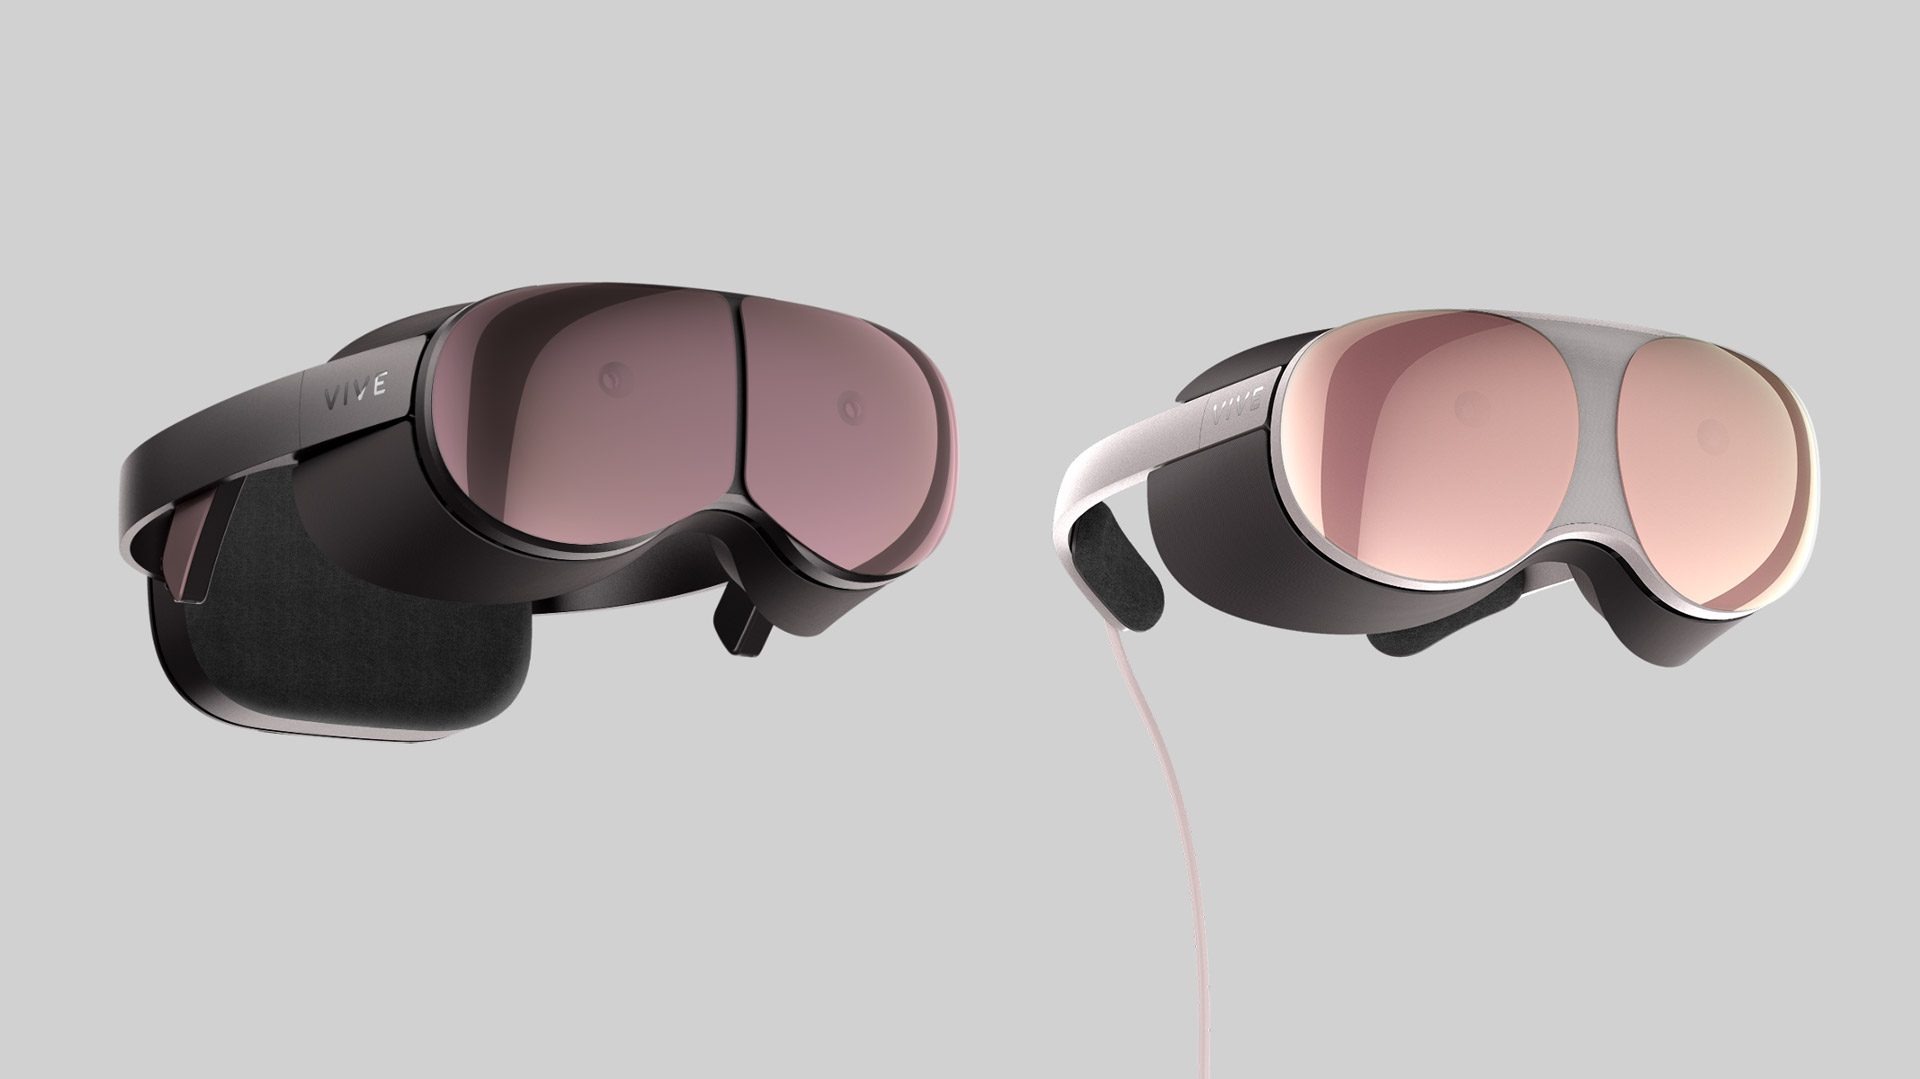 HTC Reveals Vive Proton, a Compact Standalone VR Headset Prototype